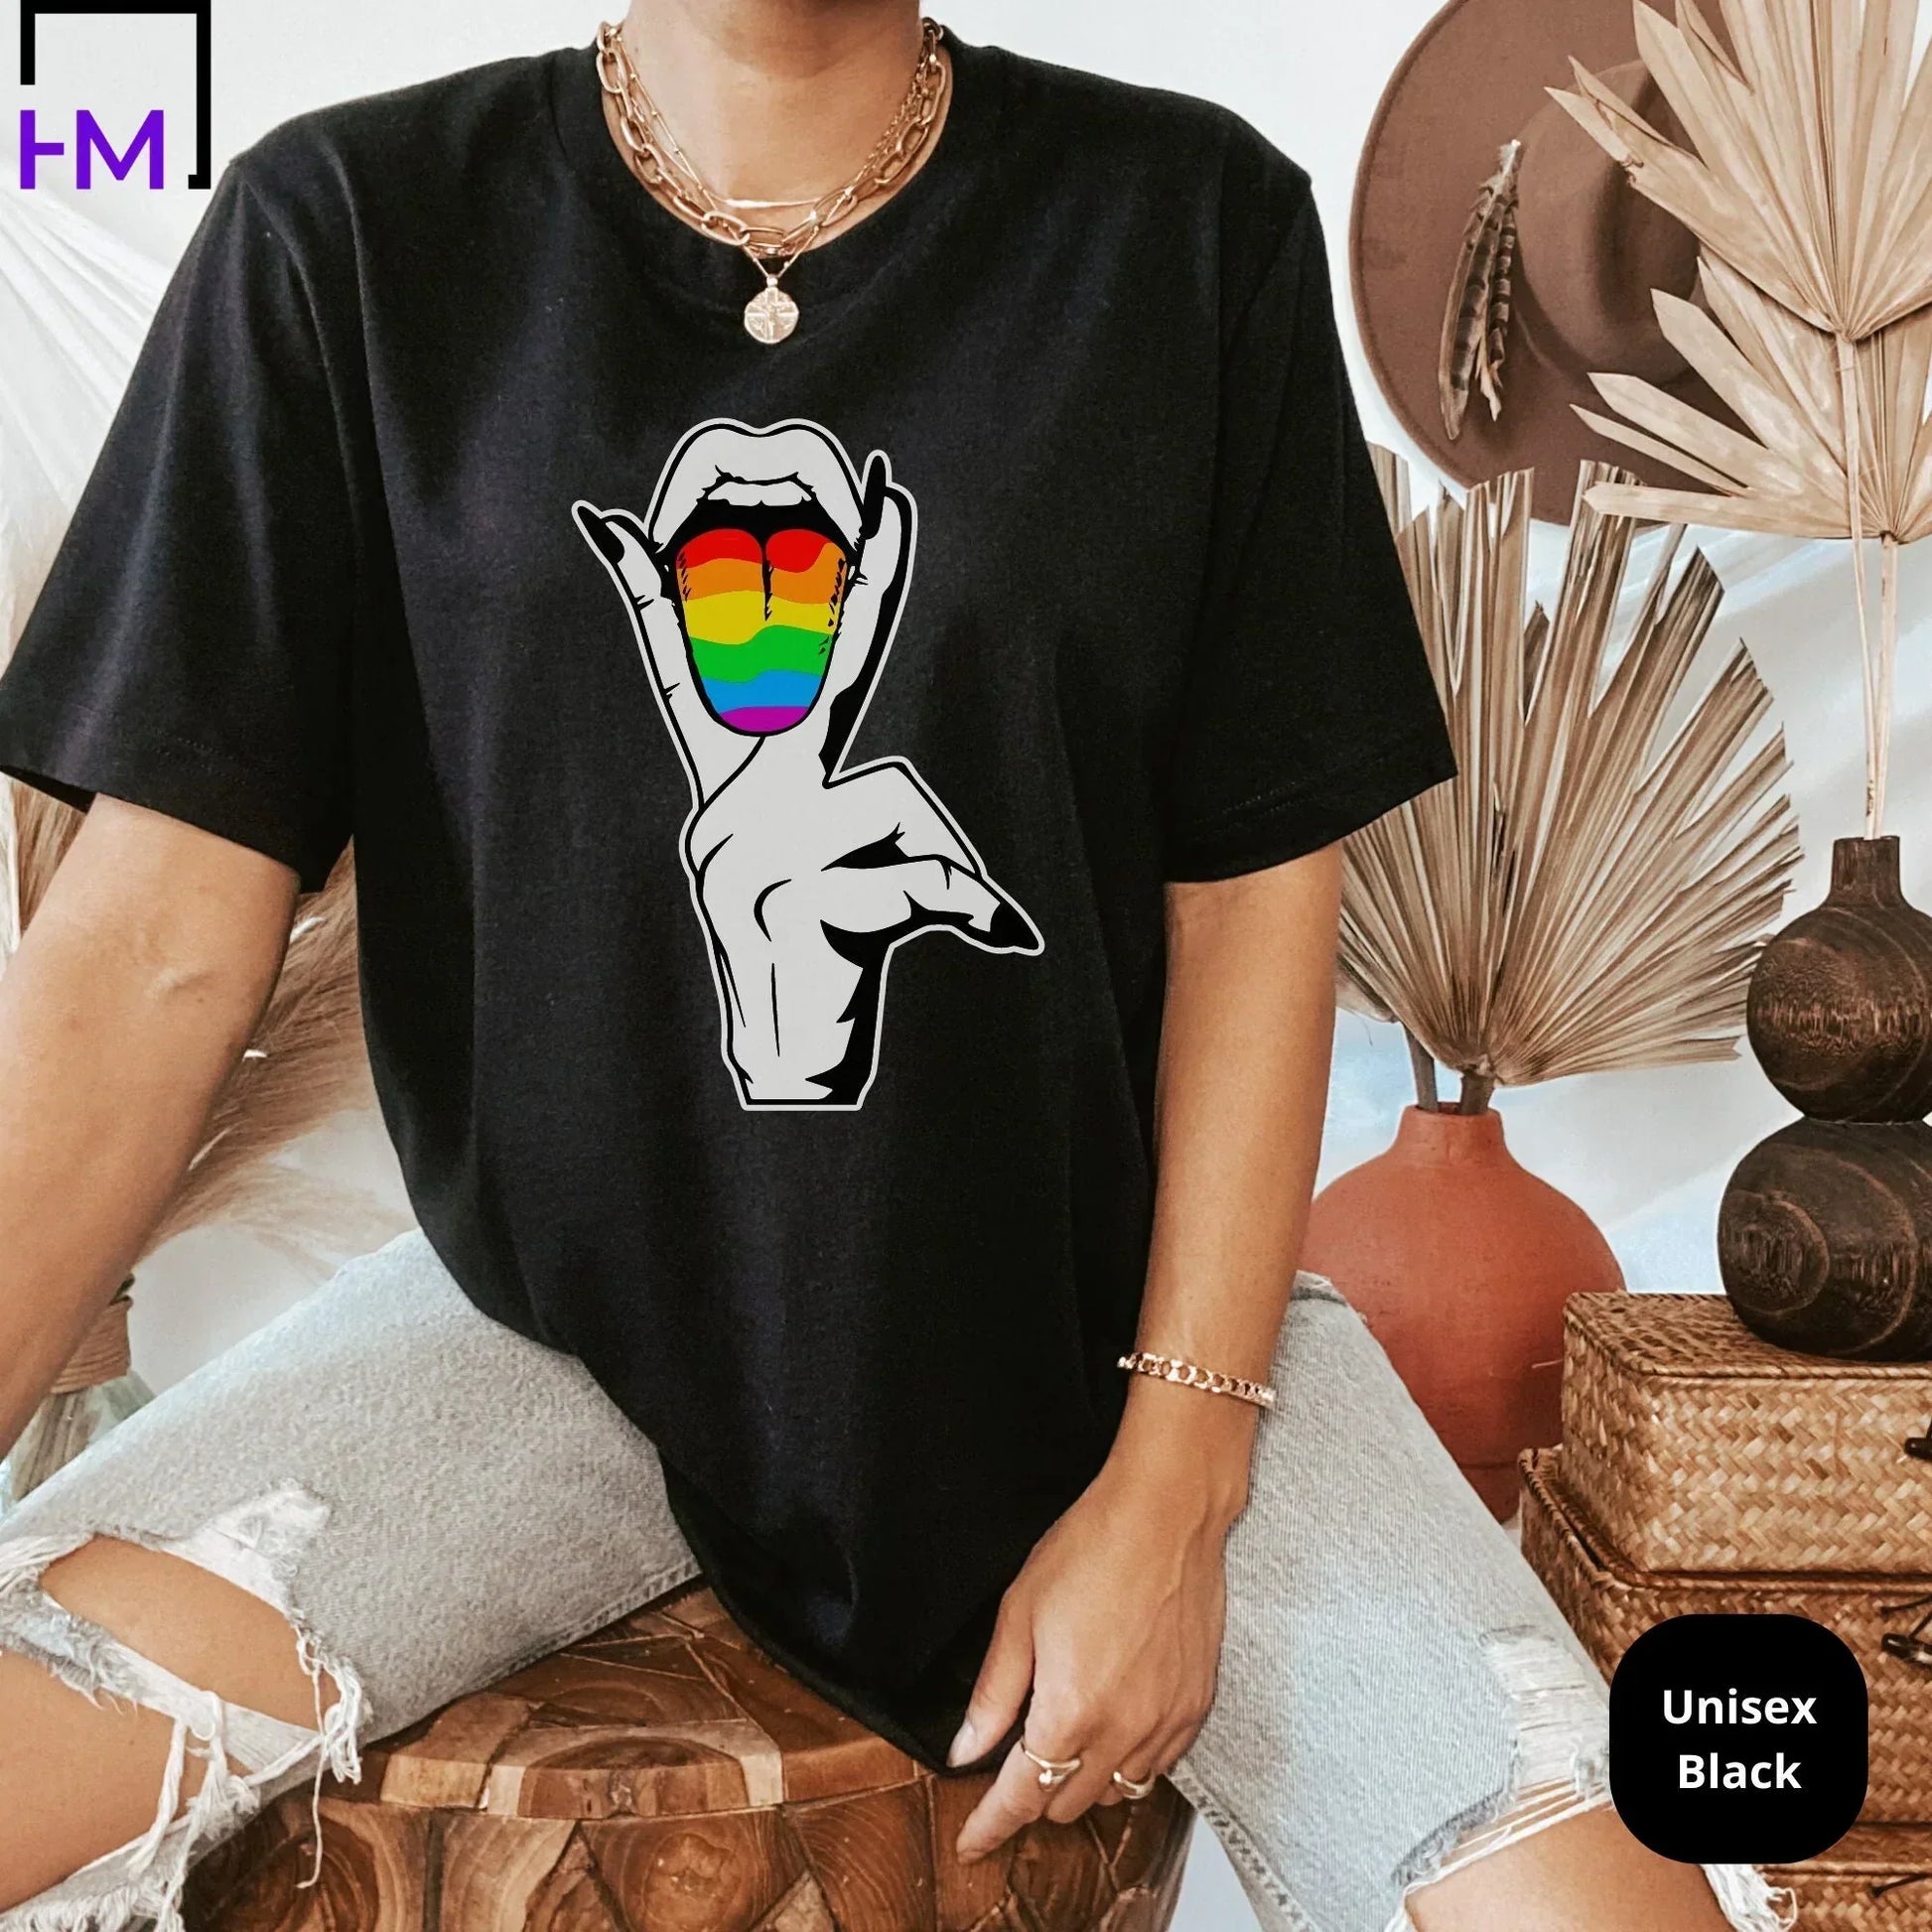 Lesbian Shirt, Peace Rainbow, Human Rights Love is Love Shirt, Retro Hippie Shirt, Equality T-Shirt, LGBTQ Support Shirts, LGBTQ Pride Tees